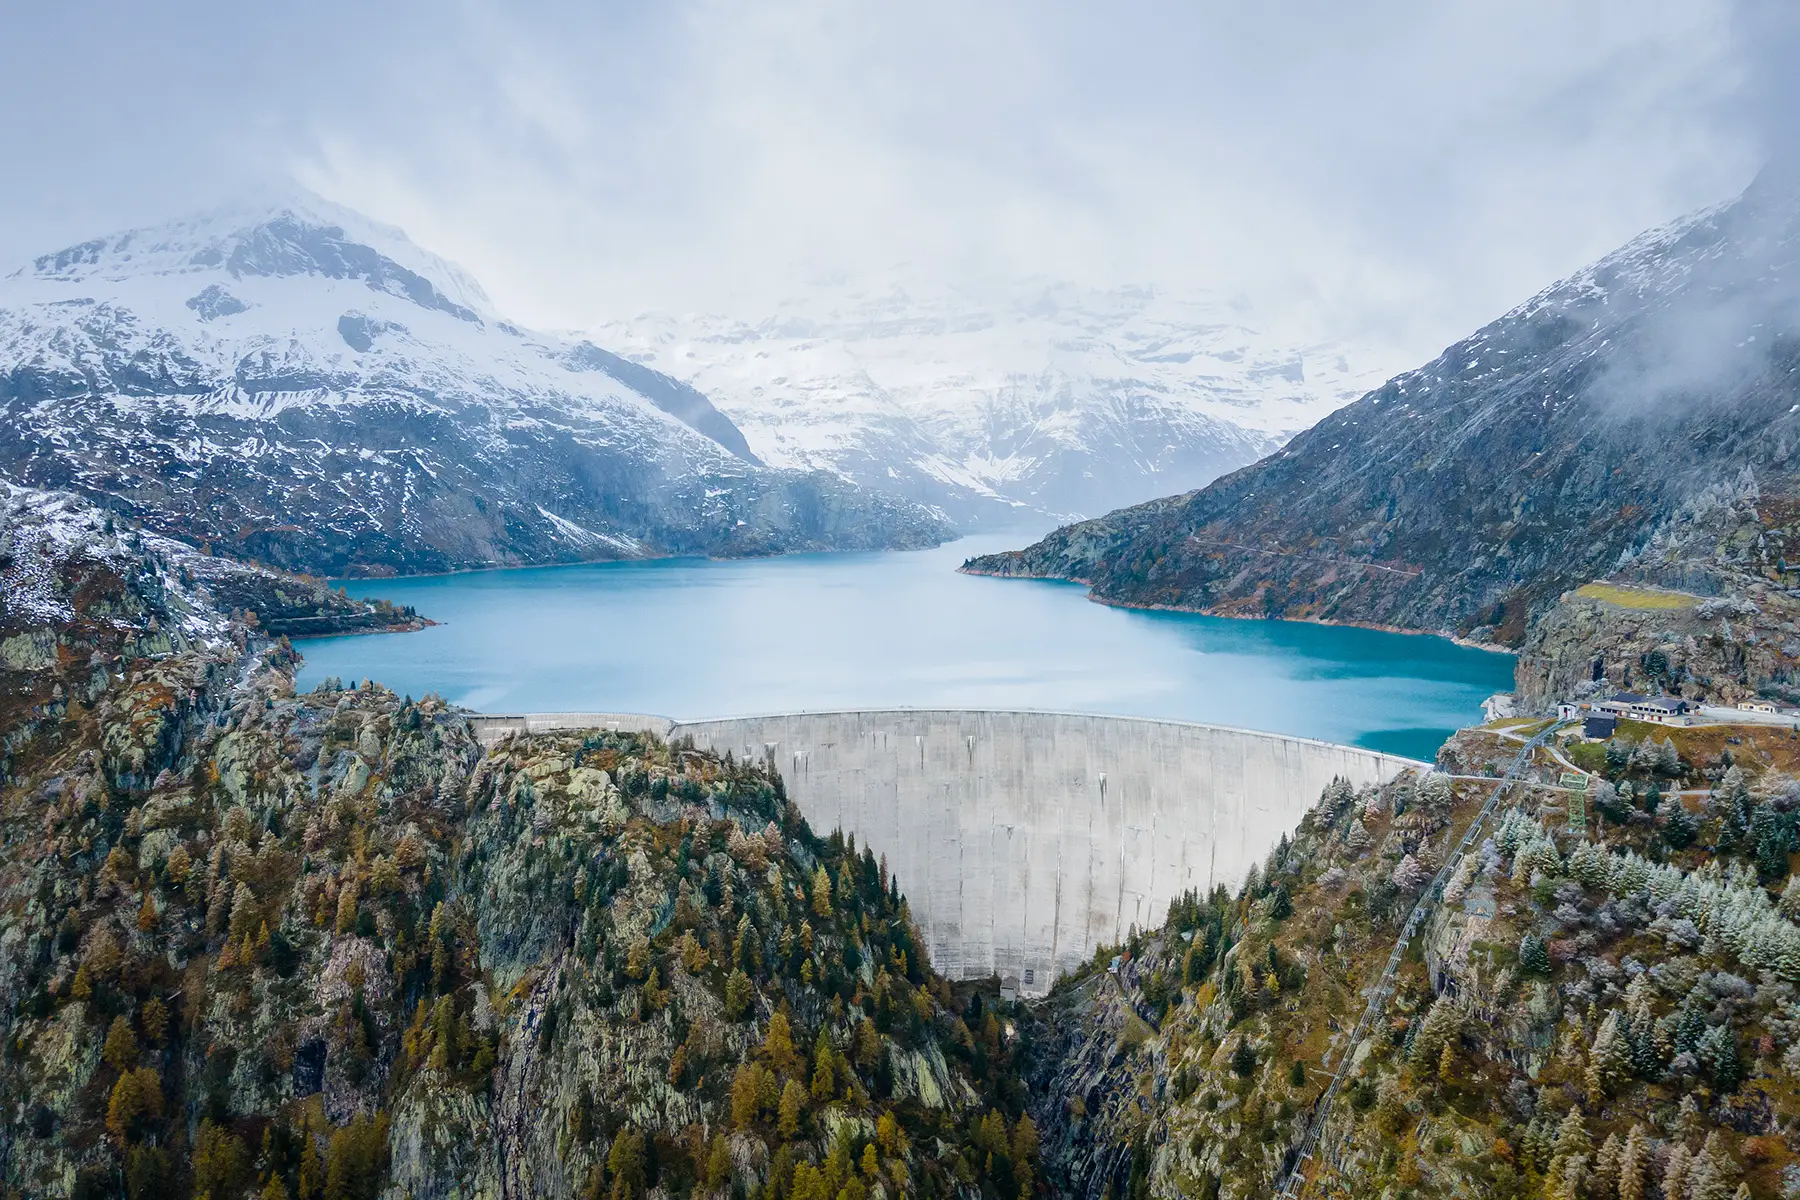 A hydroelectric dam in Switzerland